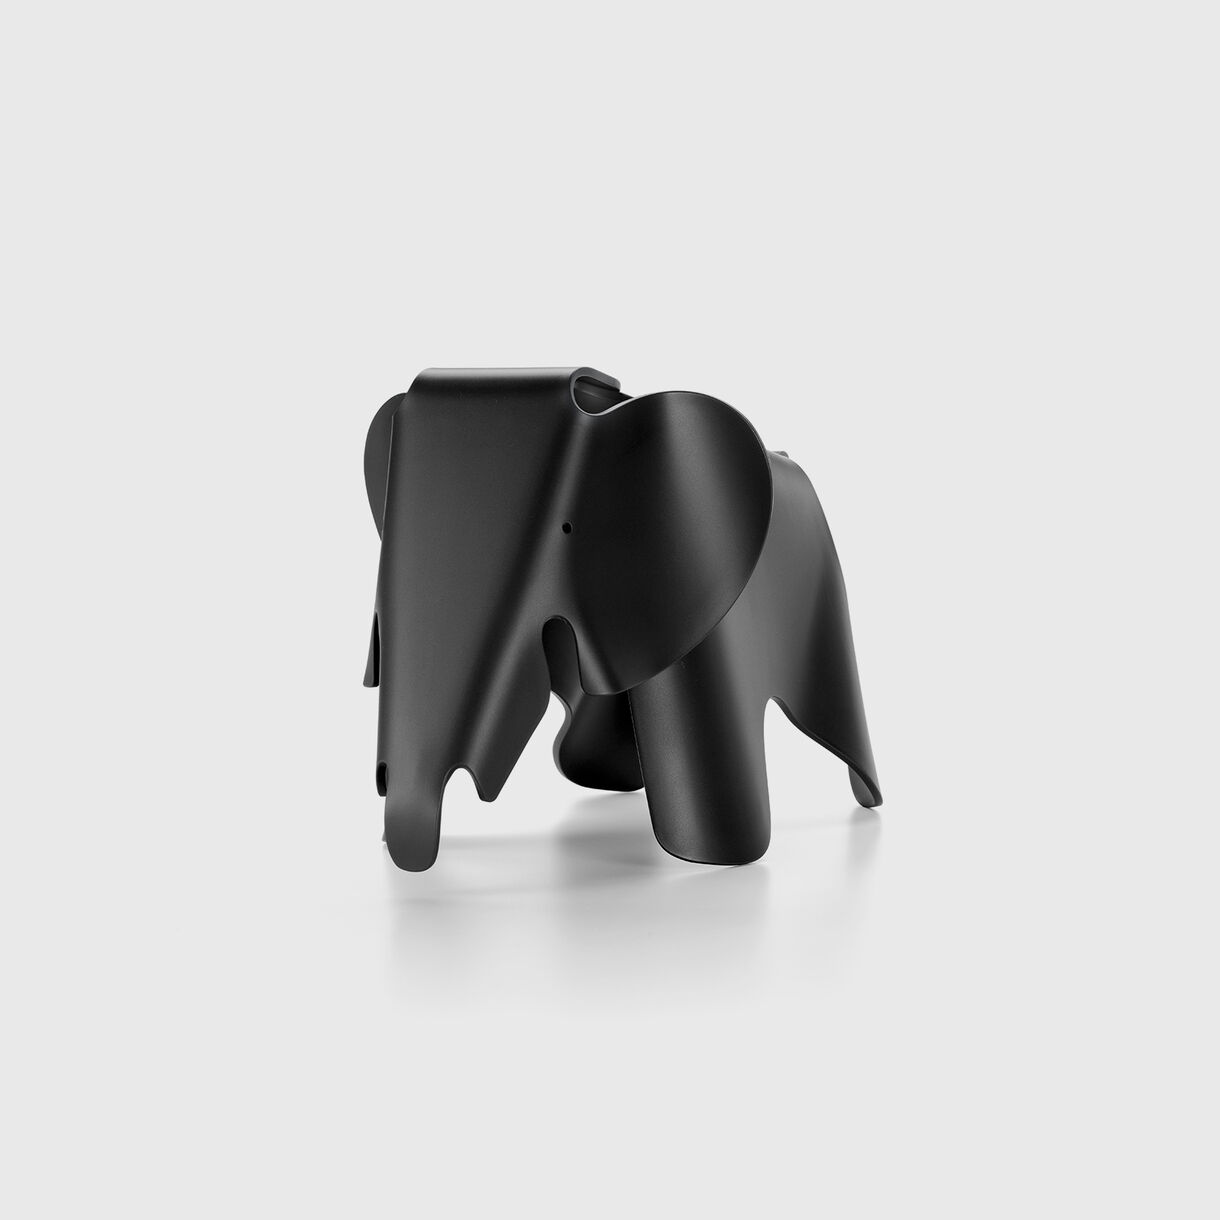 Eames Elephant Small, Deep Black